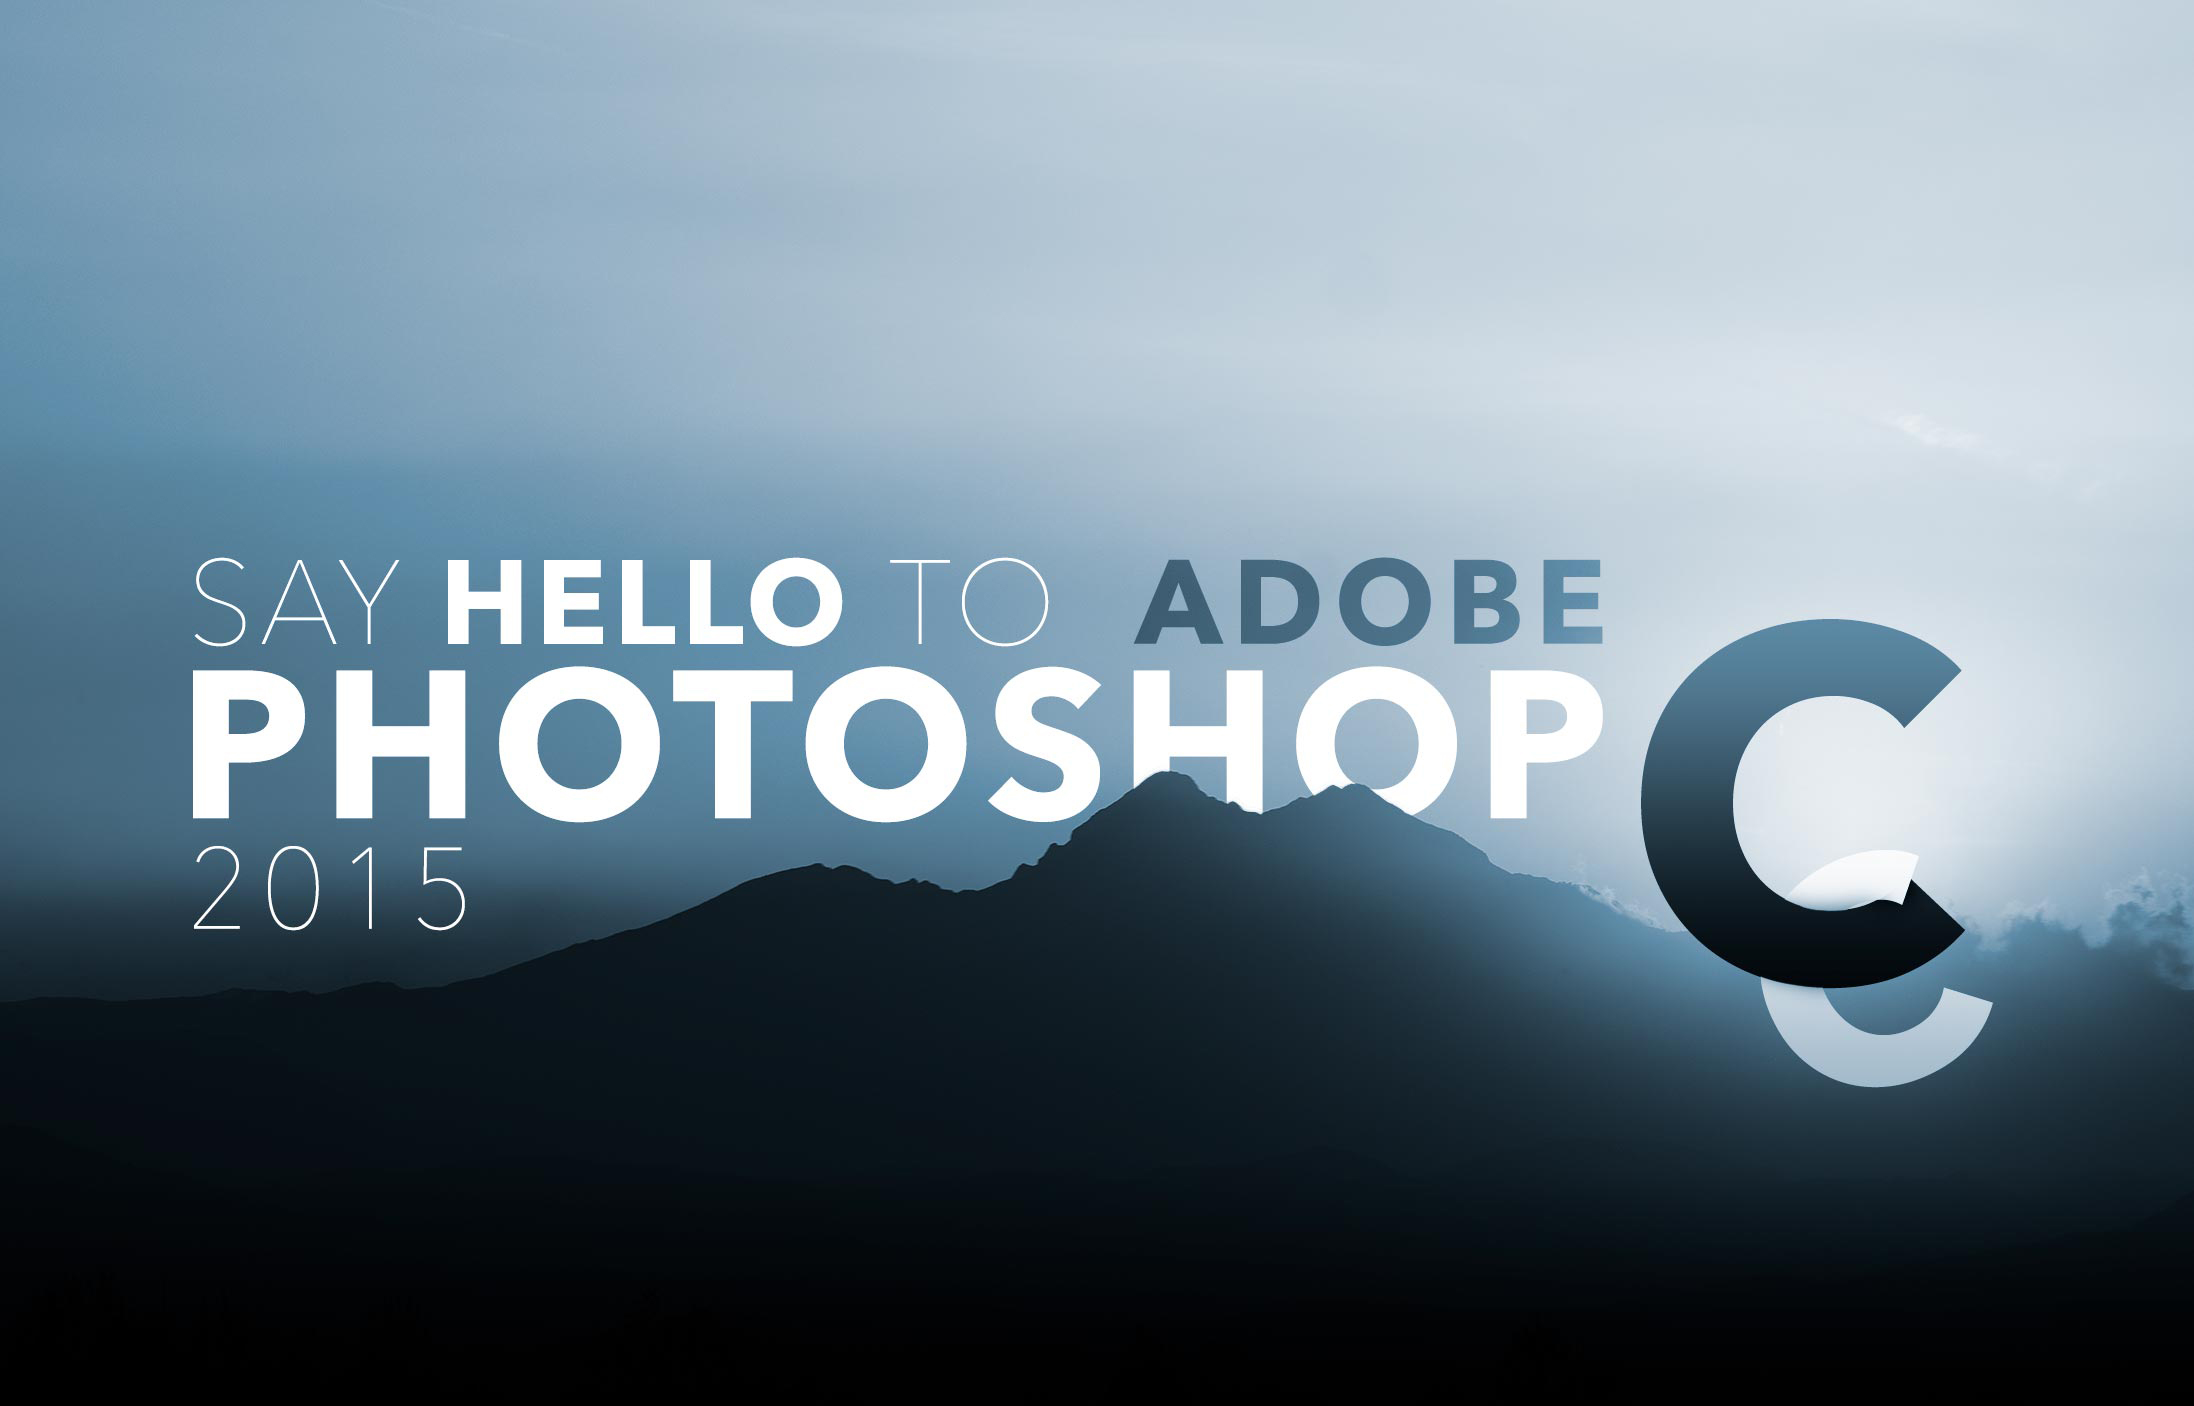 Adobe Photoshop CC 2015 Download Free Lifetime